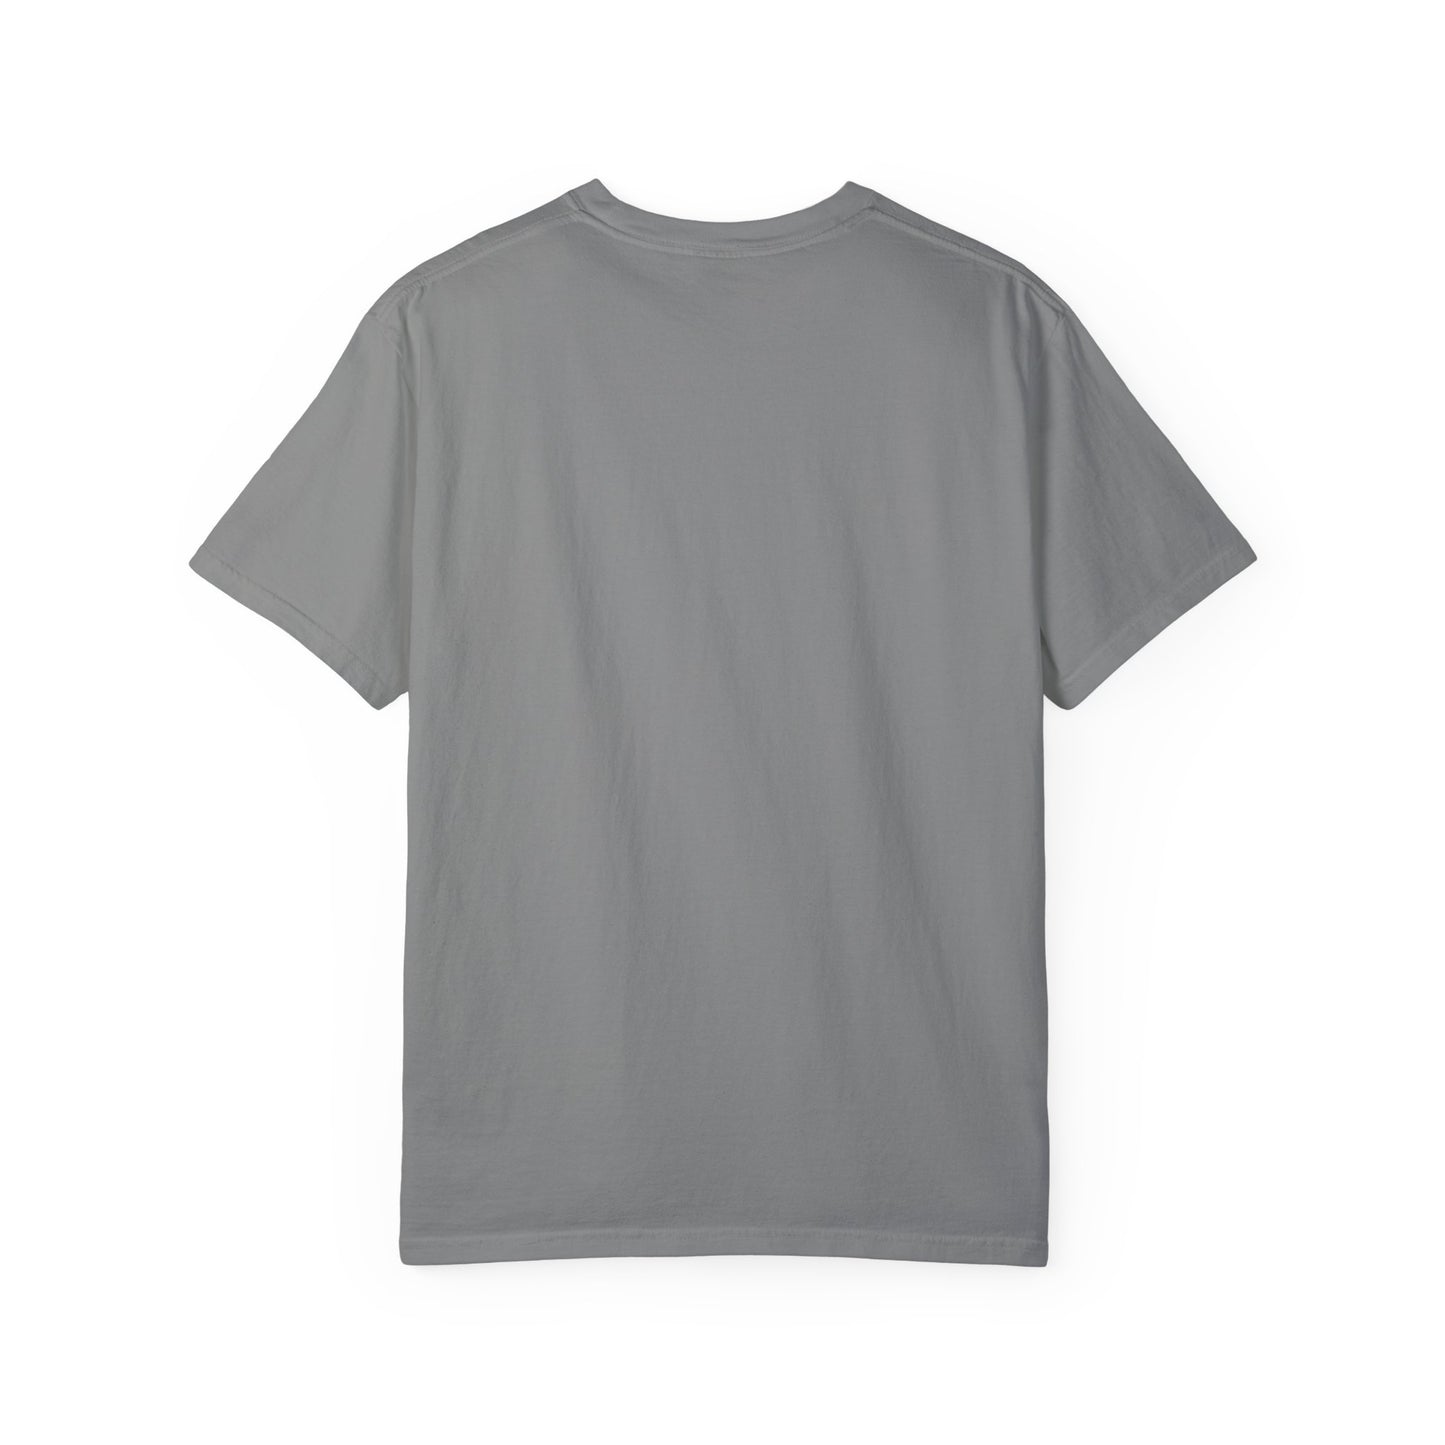 Unisex Garment-Dyed T-shirt - The Creek Ominous Eyes